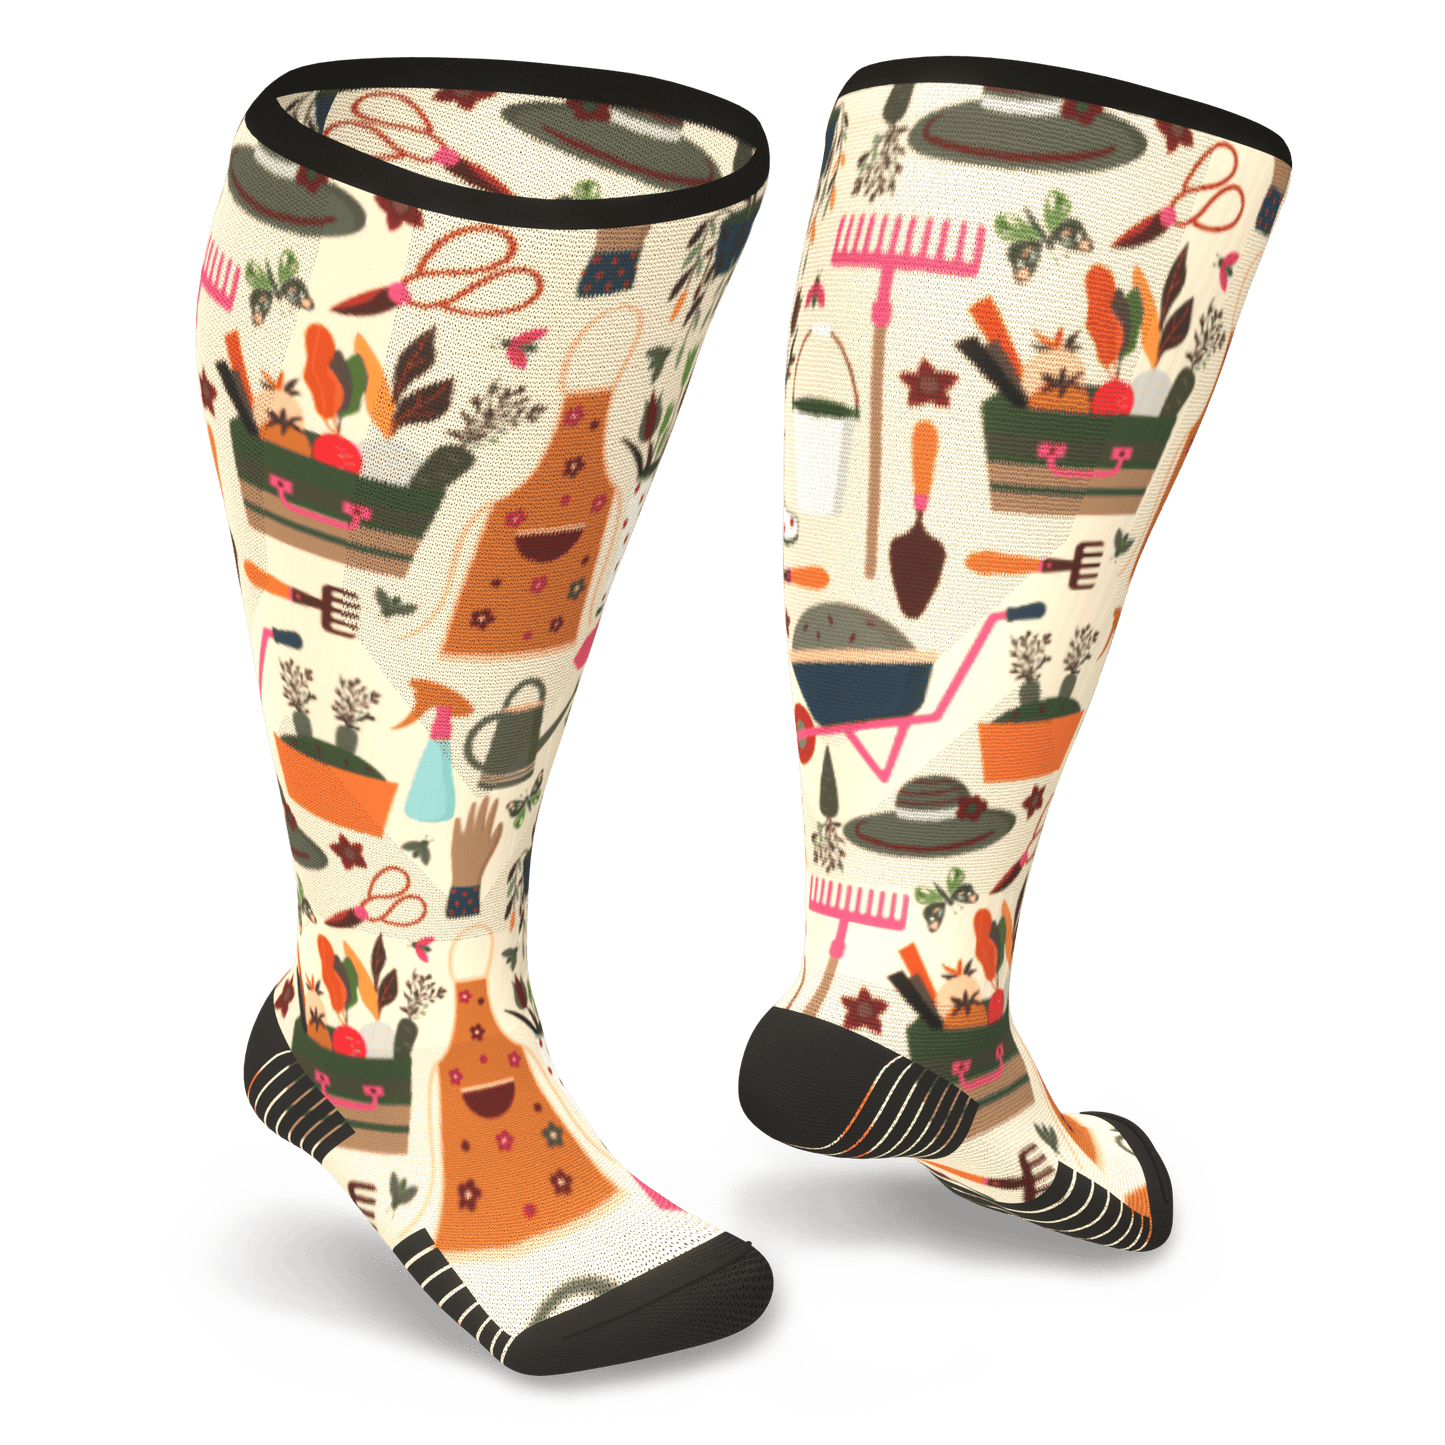 calf compression socks